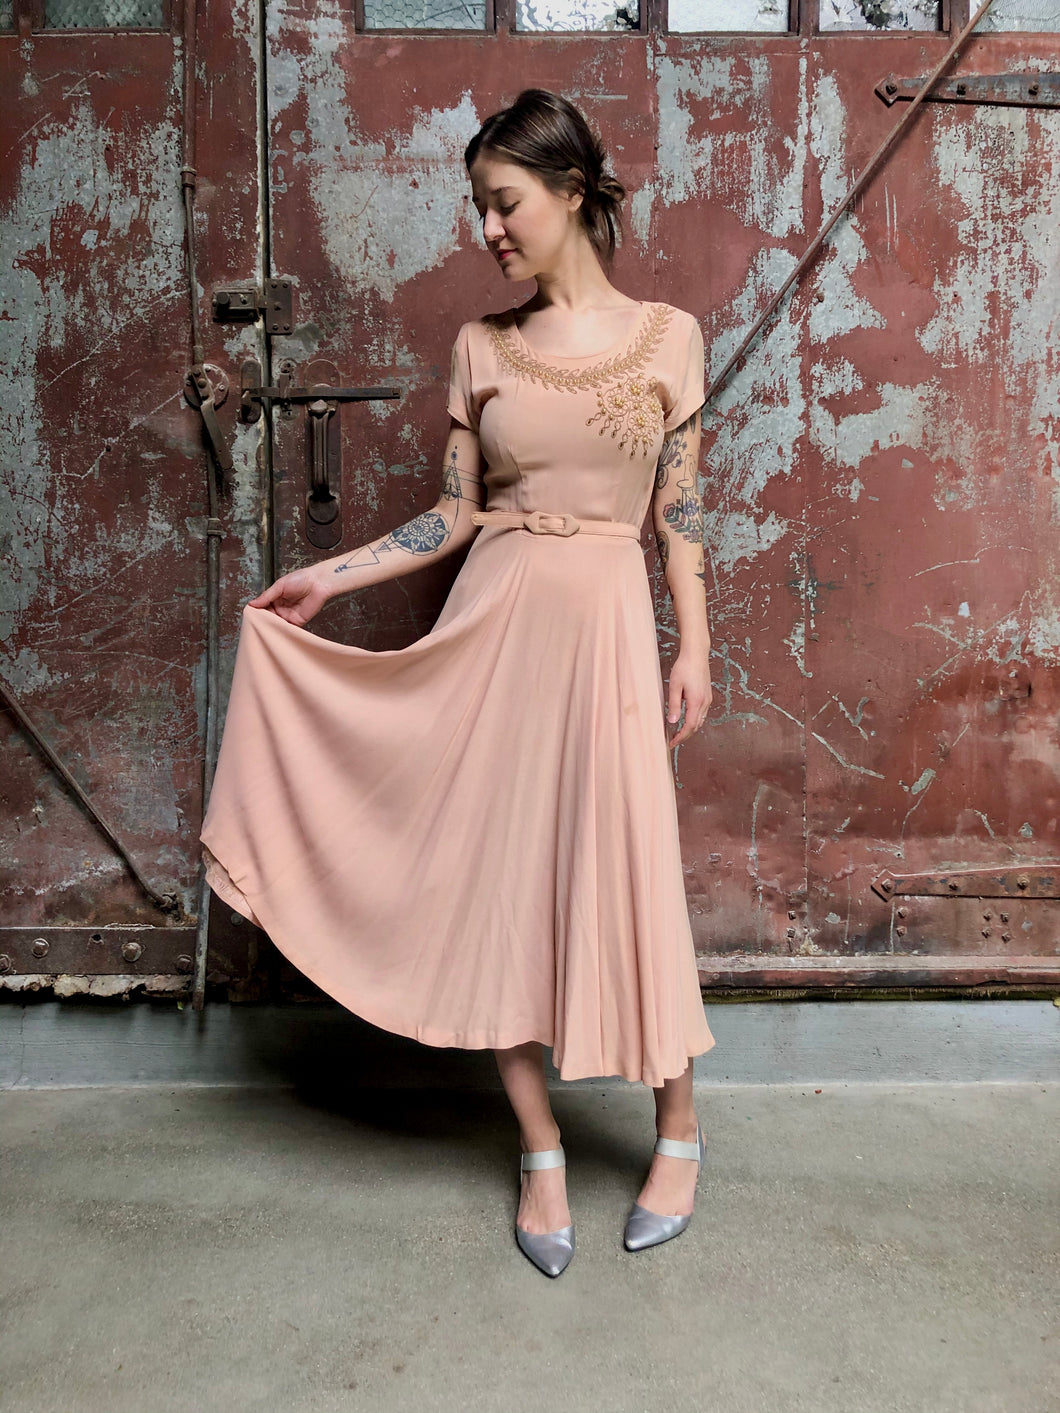 '40s Blush Dress